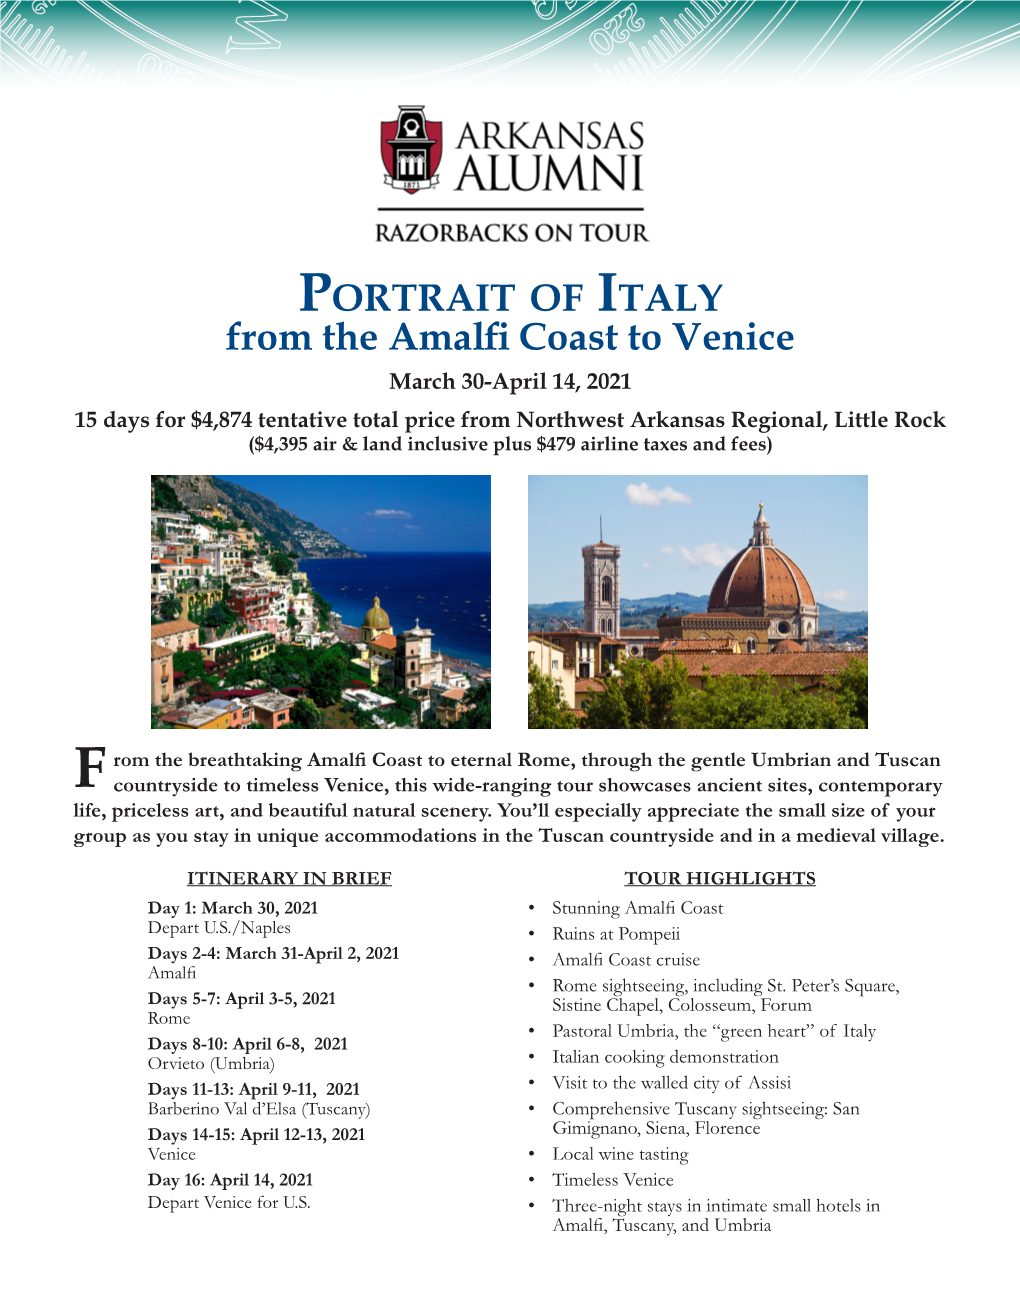 From the Amalfi Coast to Venice